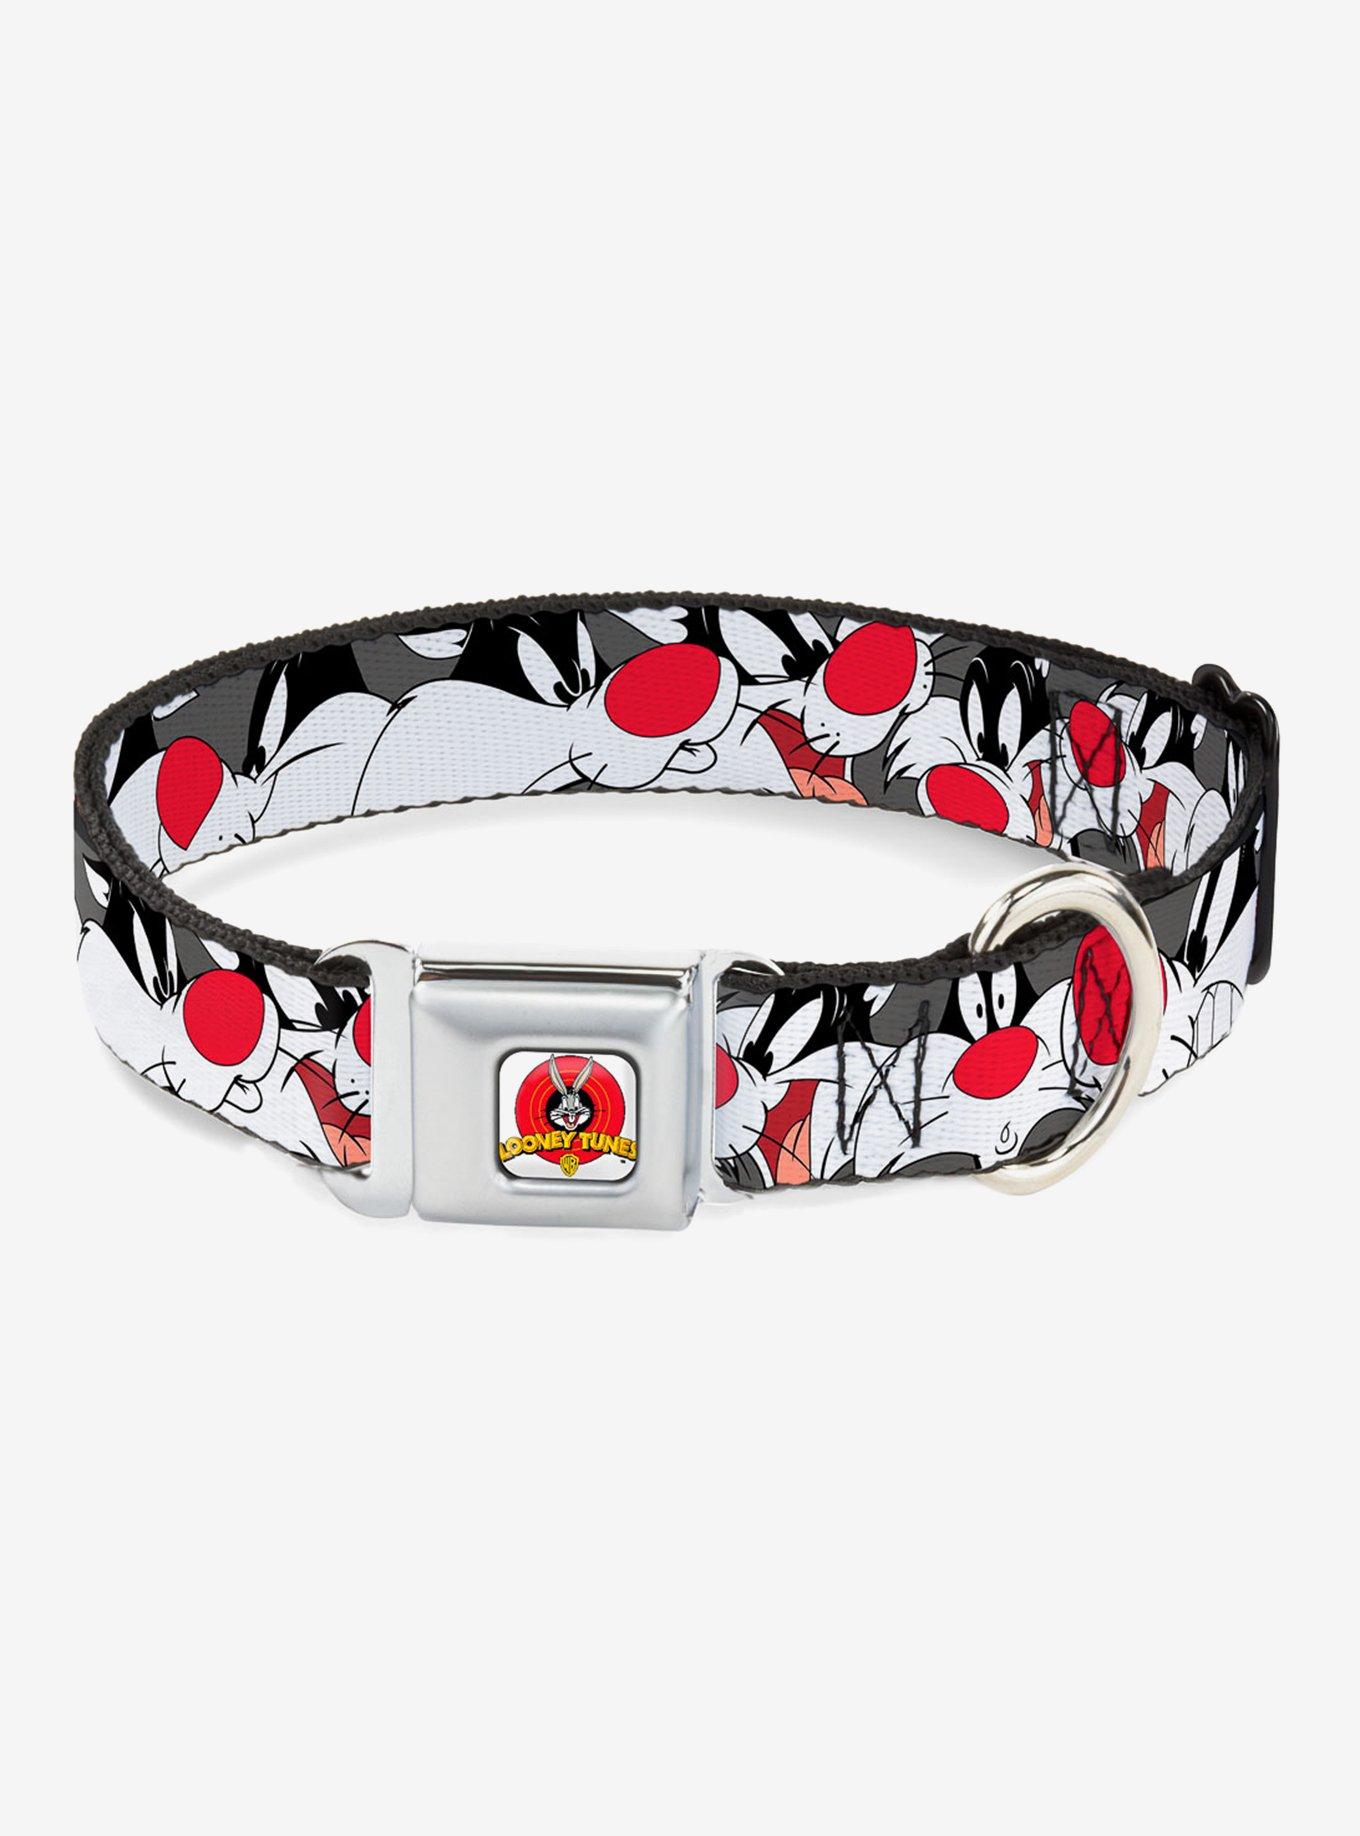 Deadpool Dog Collar / Superhero Dog Collar / Dog Collars 